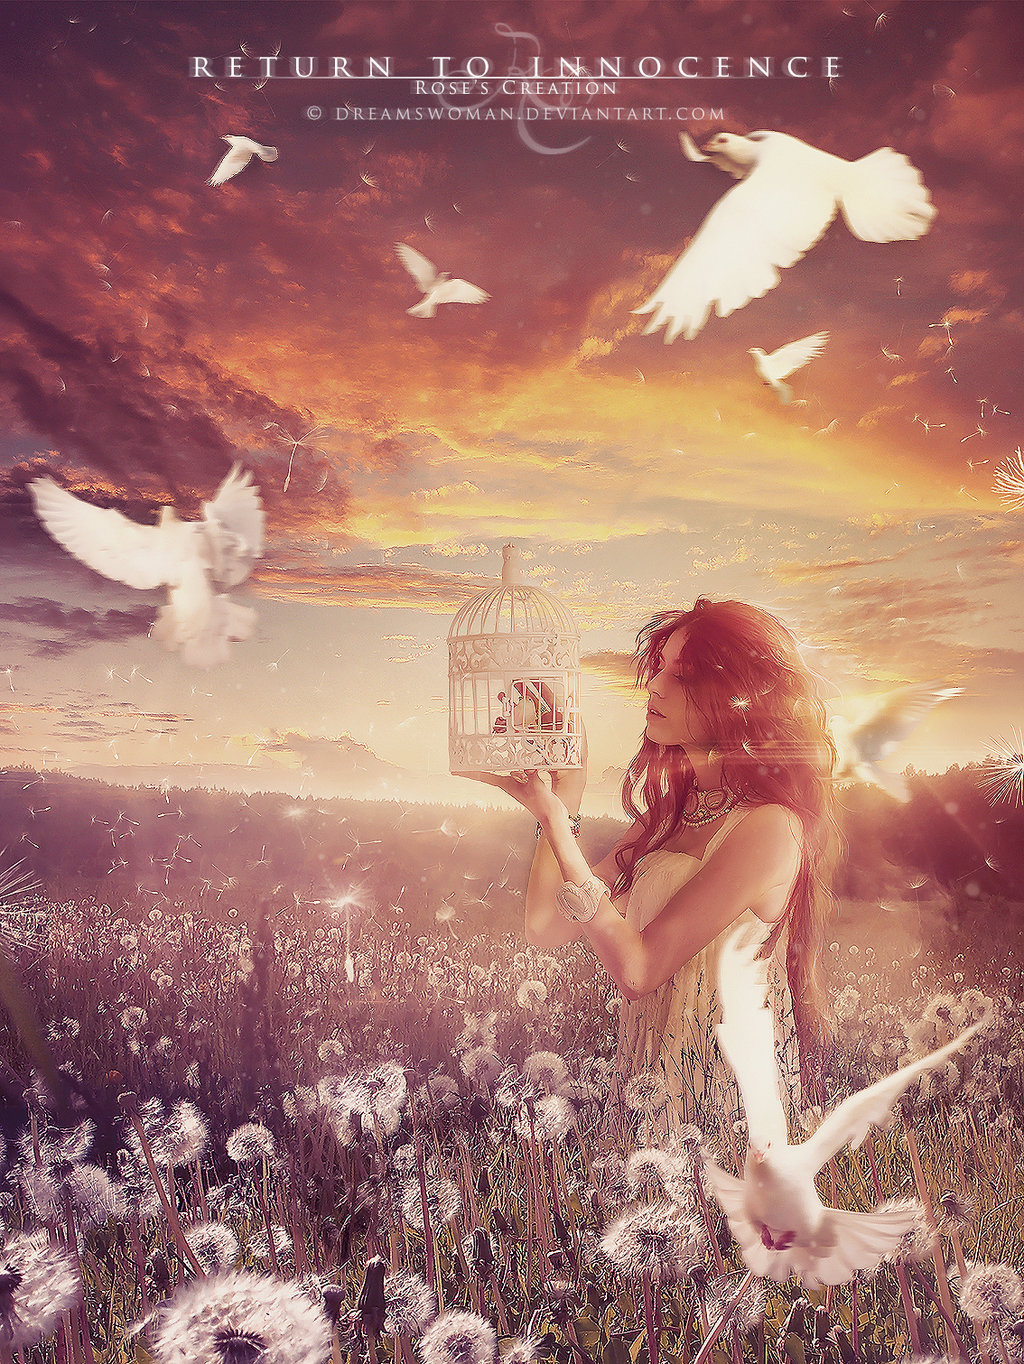 Фото Девушка с клеткой и белые голуби (Return to Innocence), by dreamswoman